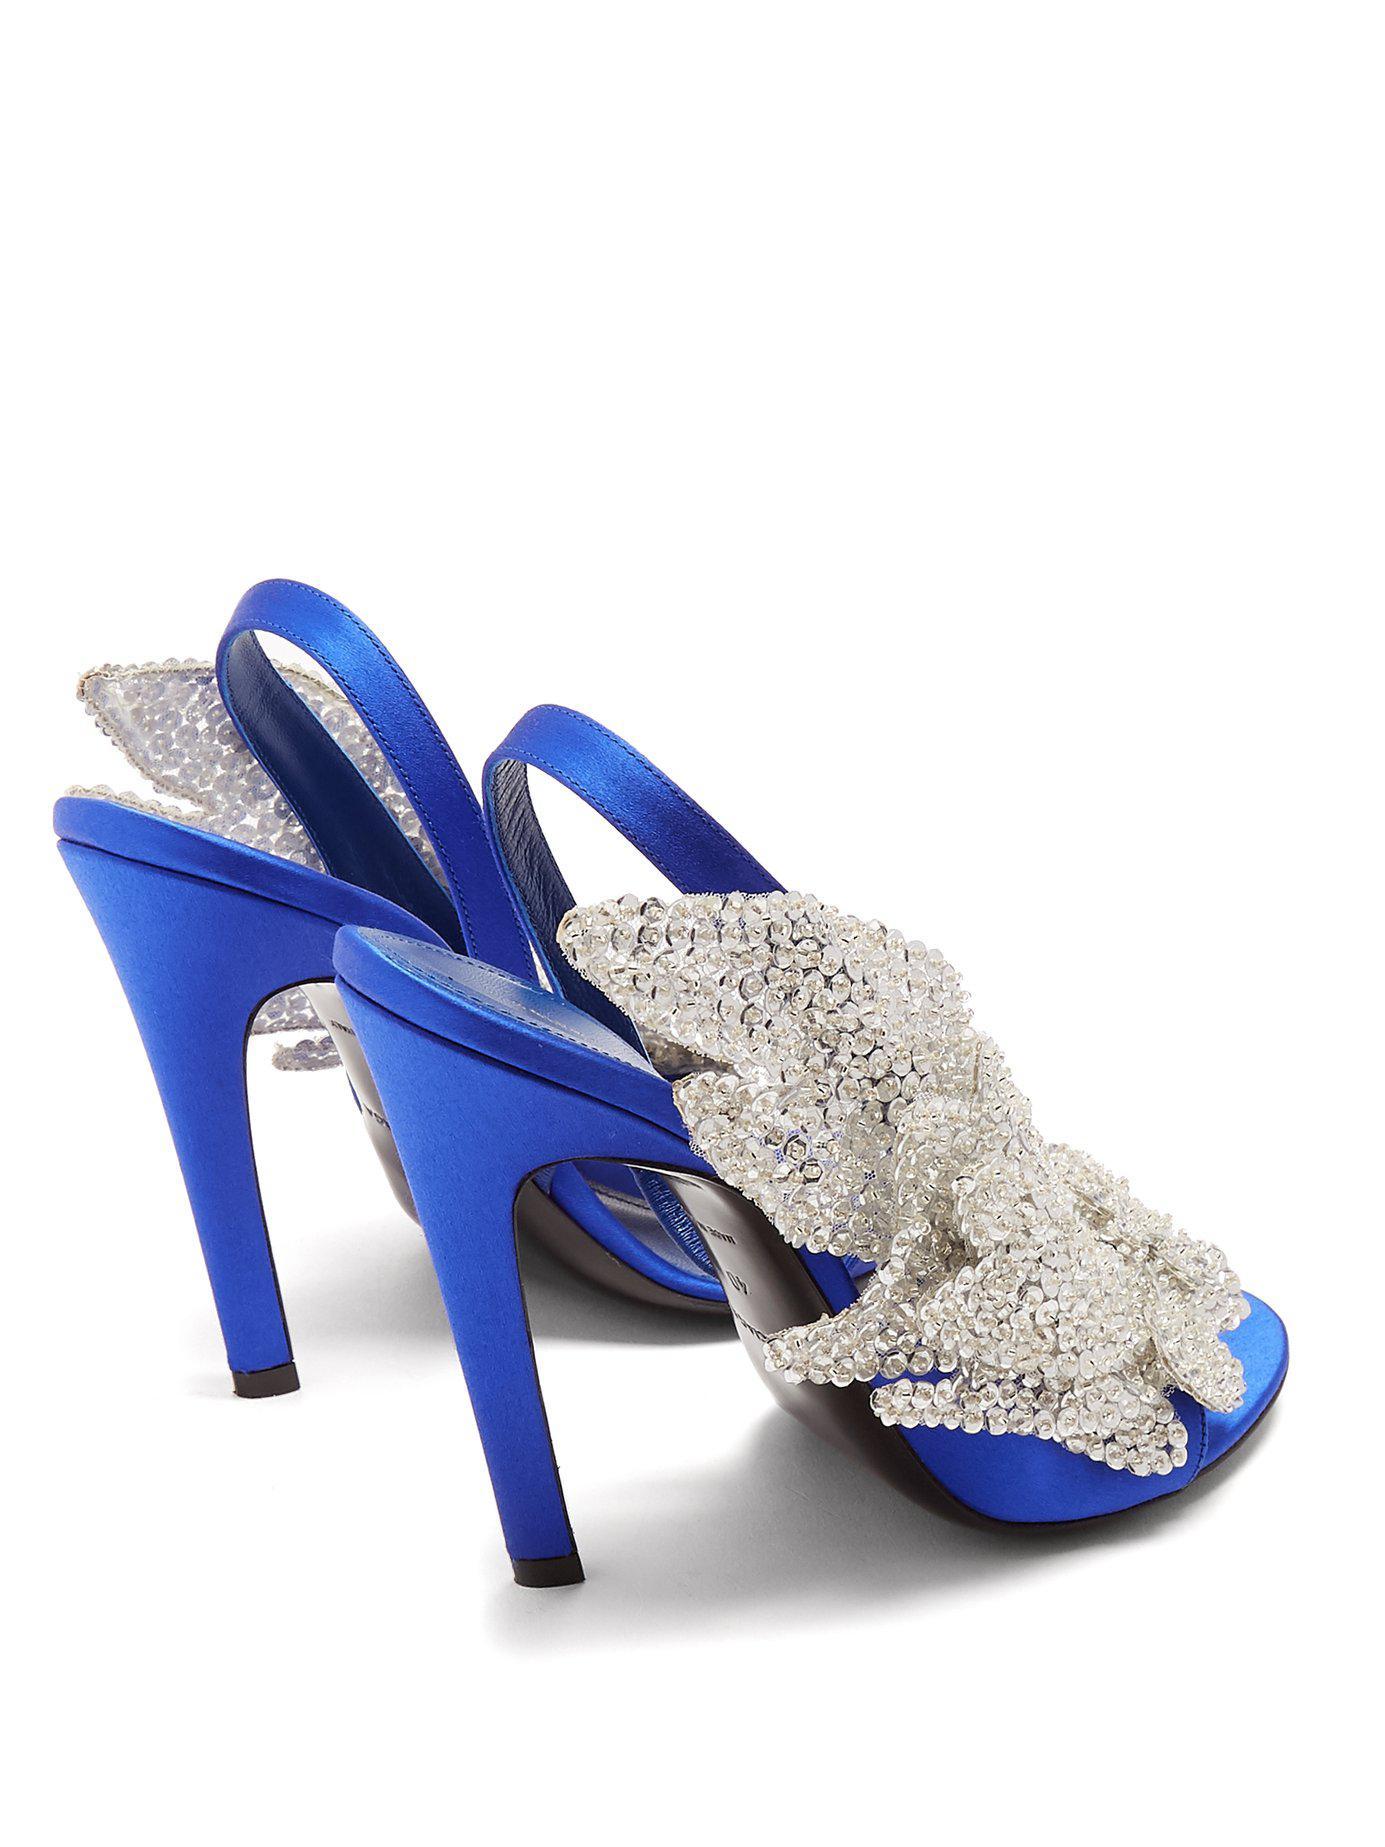 Balenciaga Satin Talon Slash Pumps in Blue | Lyst